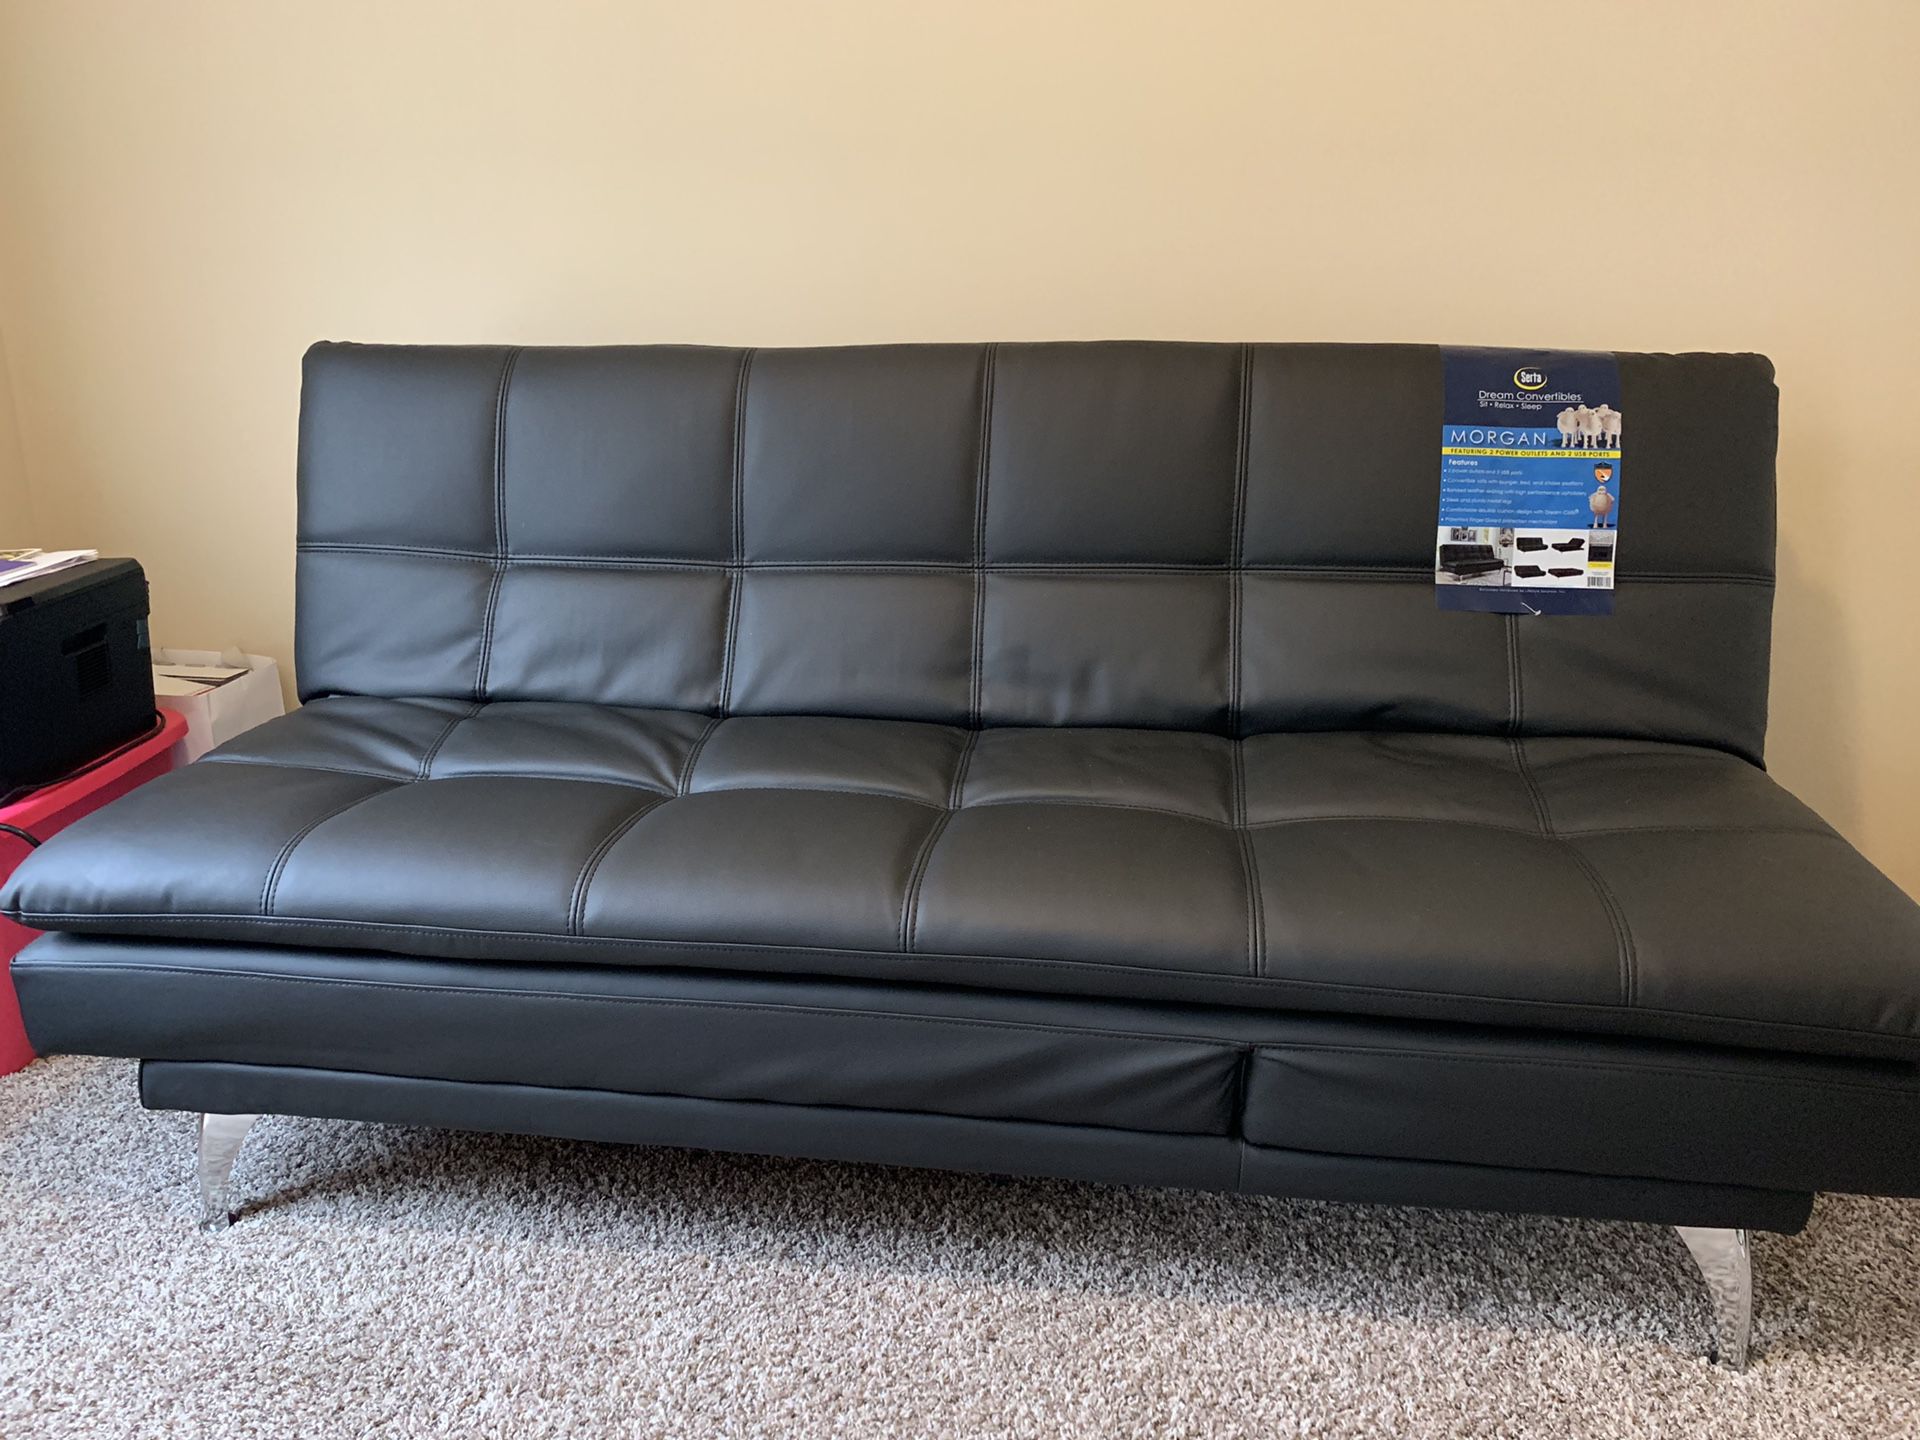 Black Serta “Morgan” convertible sofa